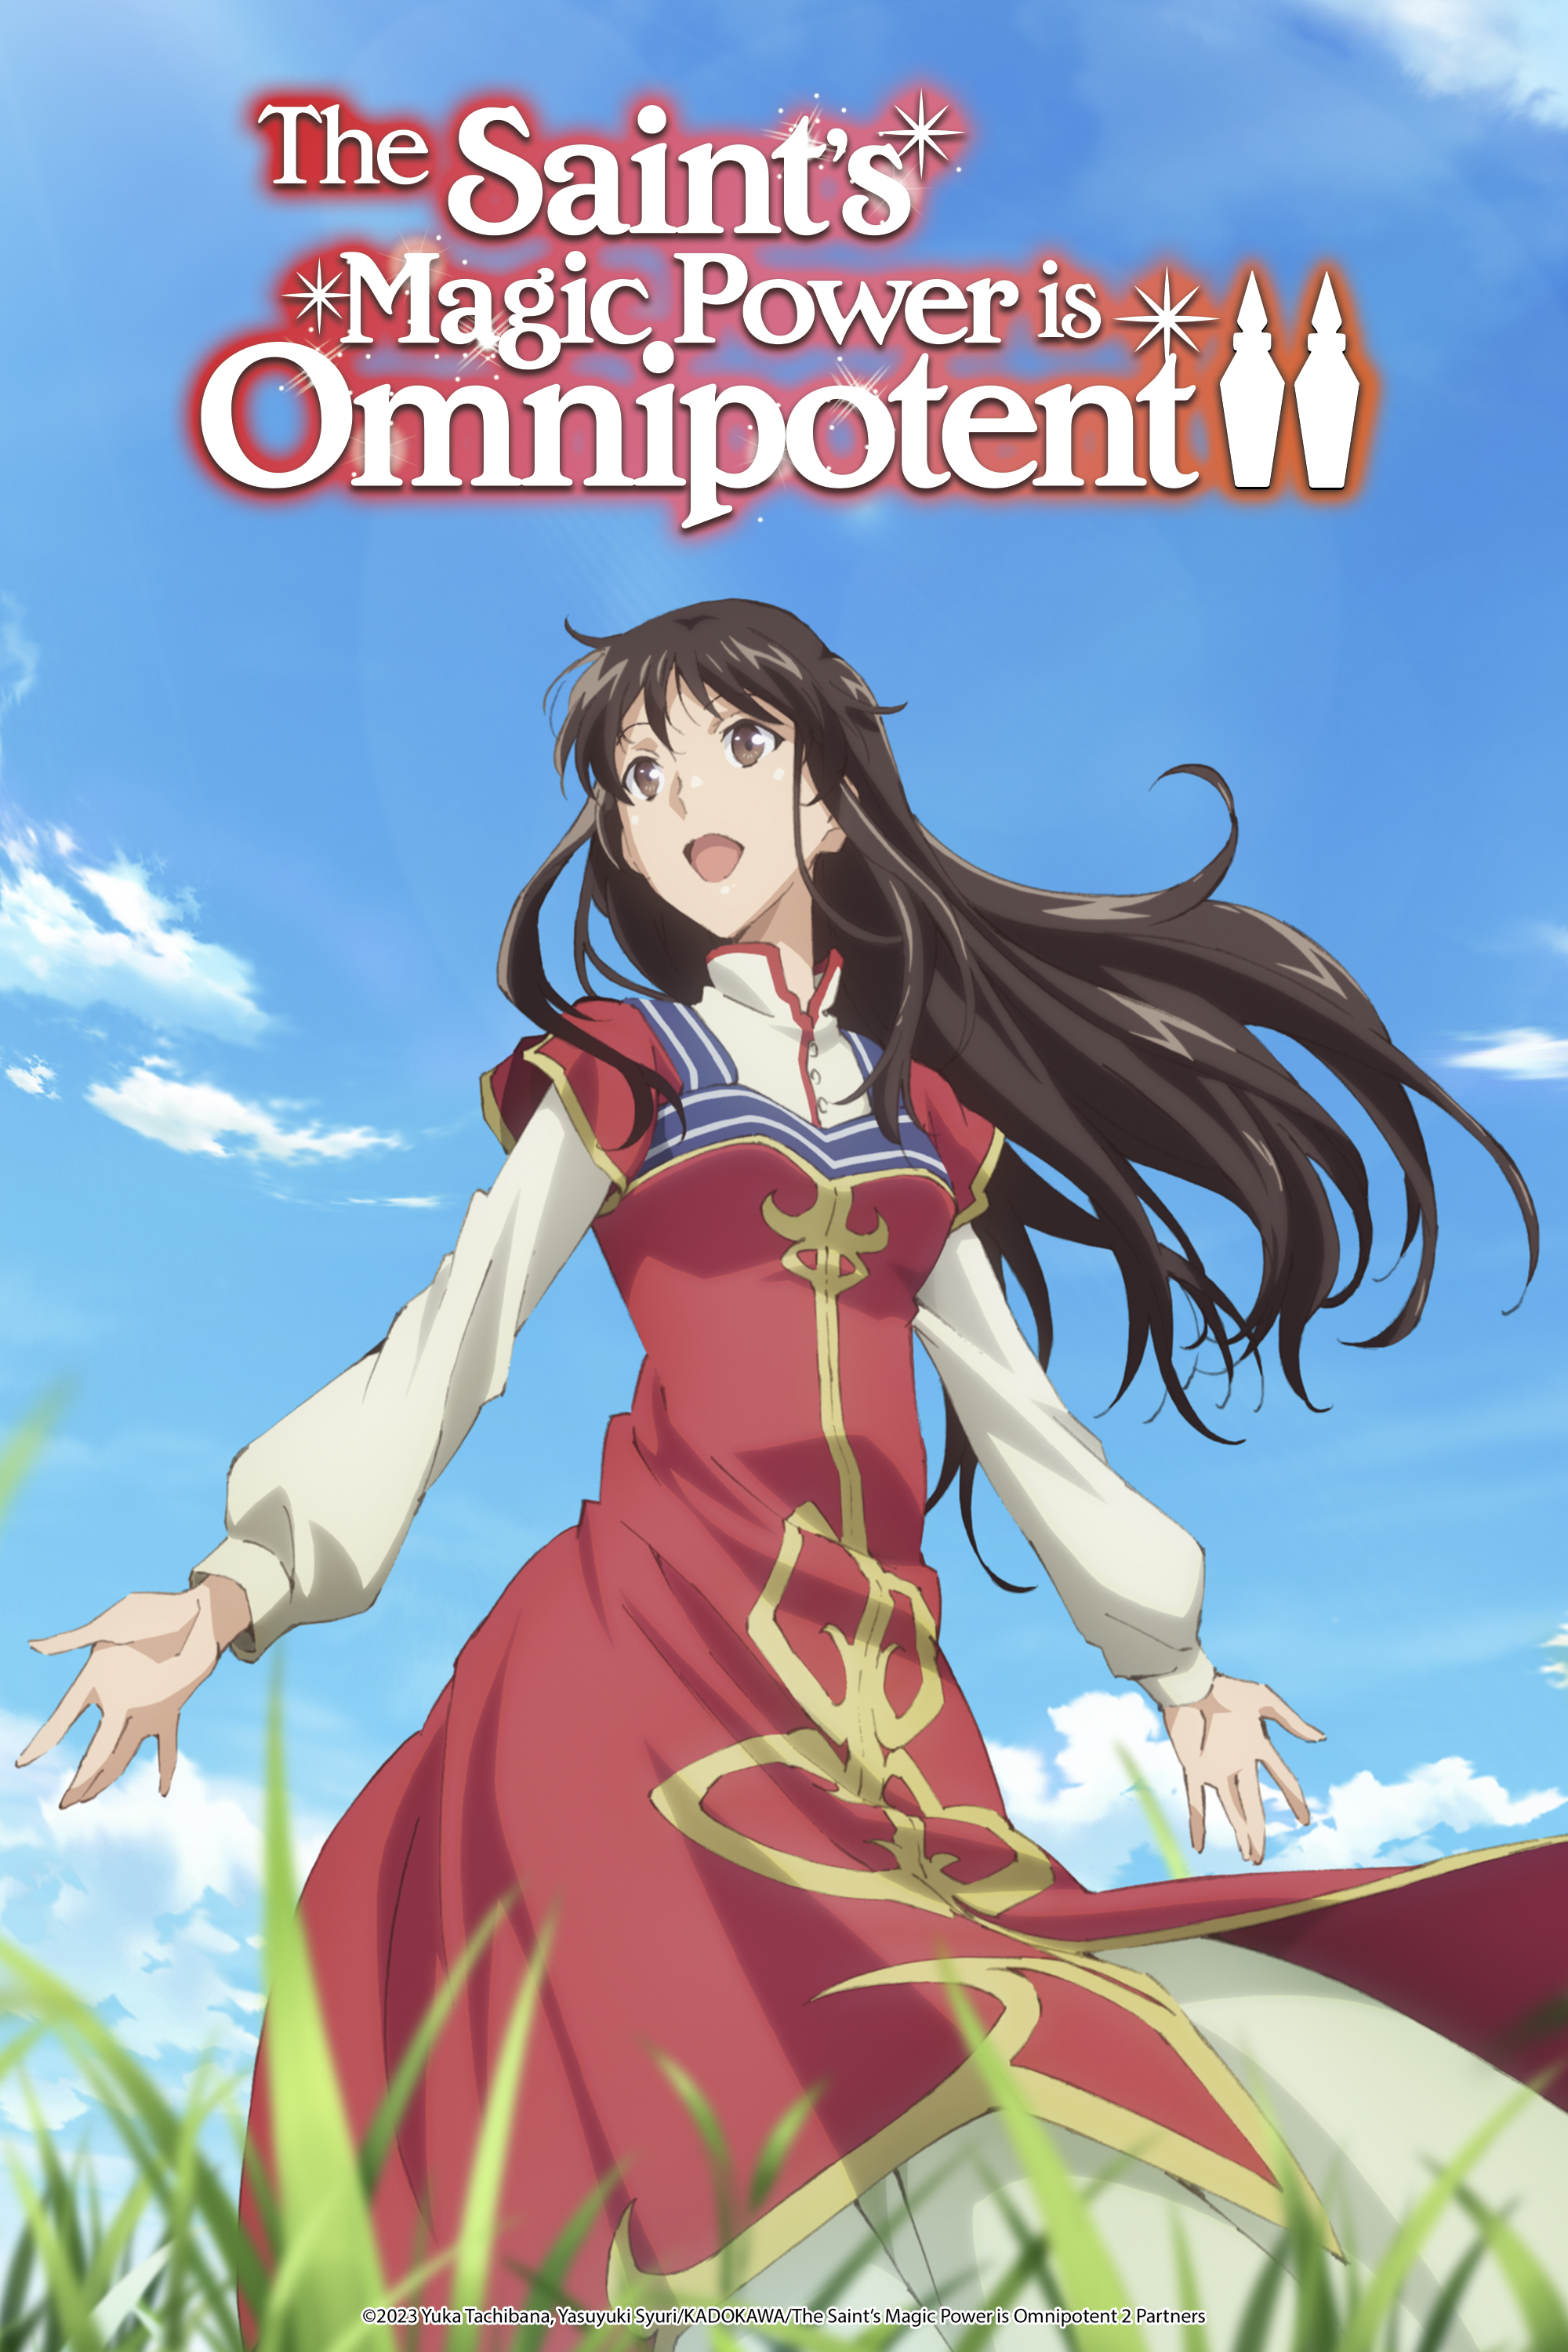 Crunchyroll Adds Oreshura and Maoyu to Anime Lineup